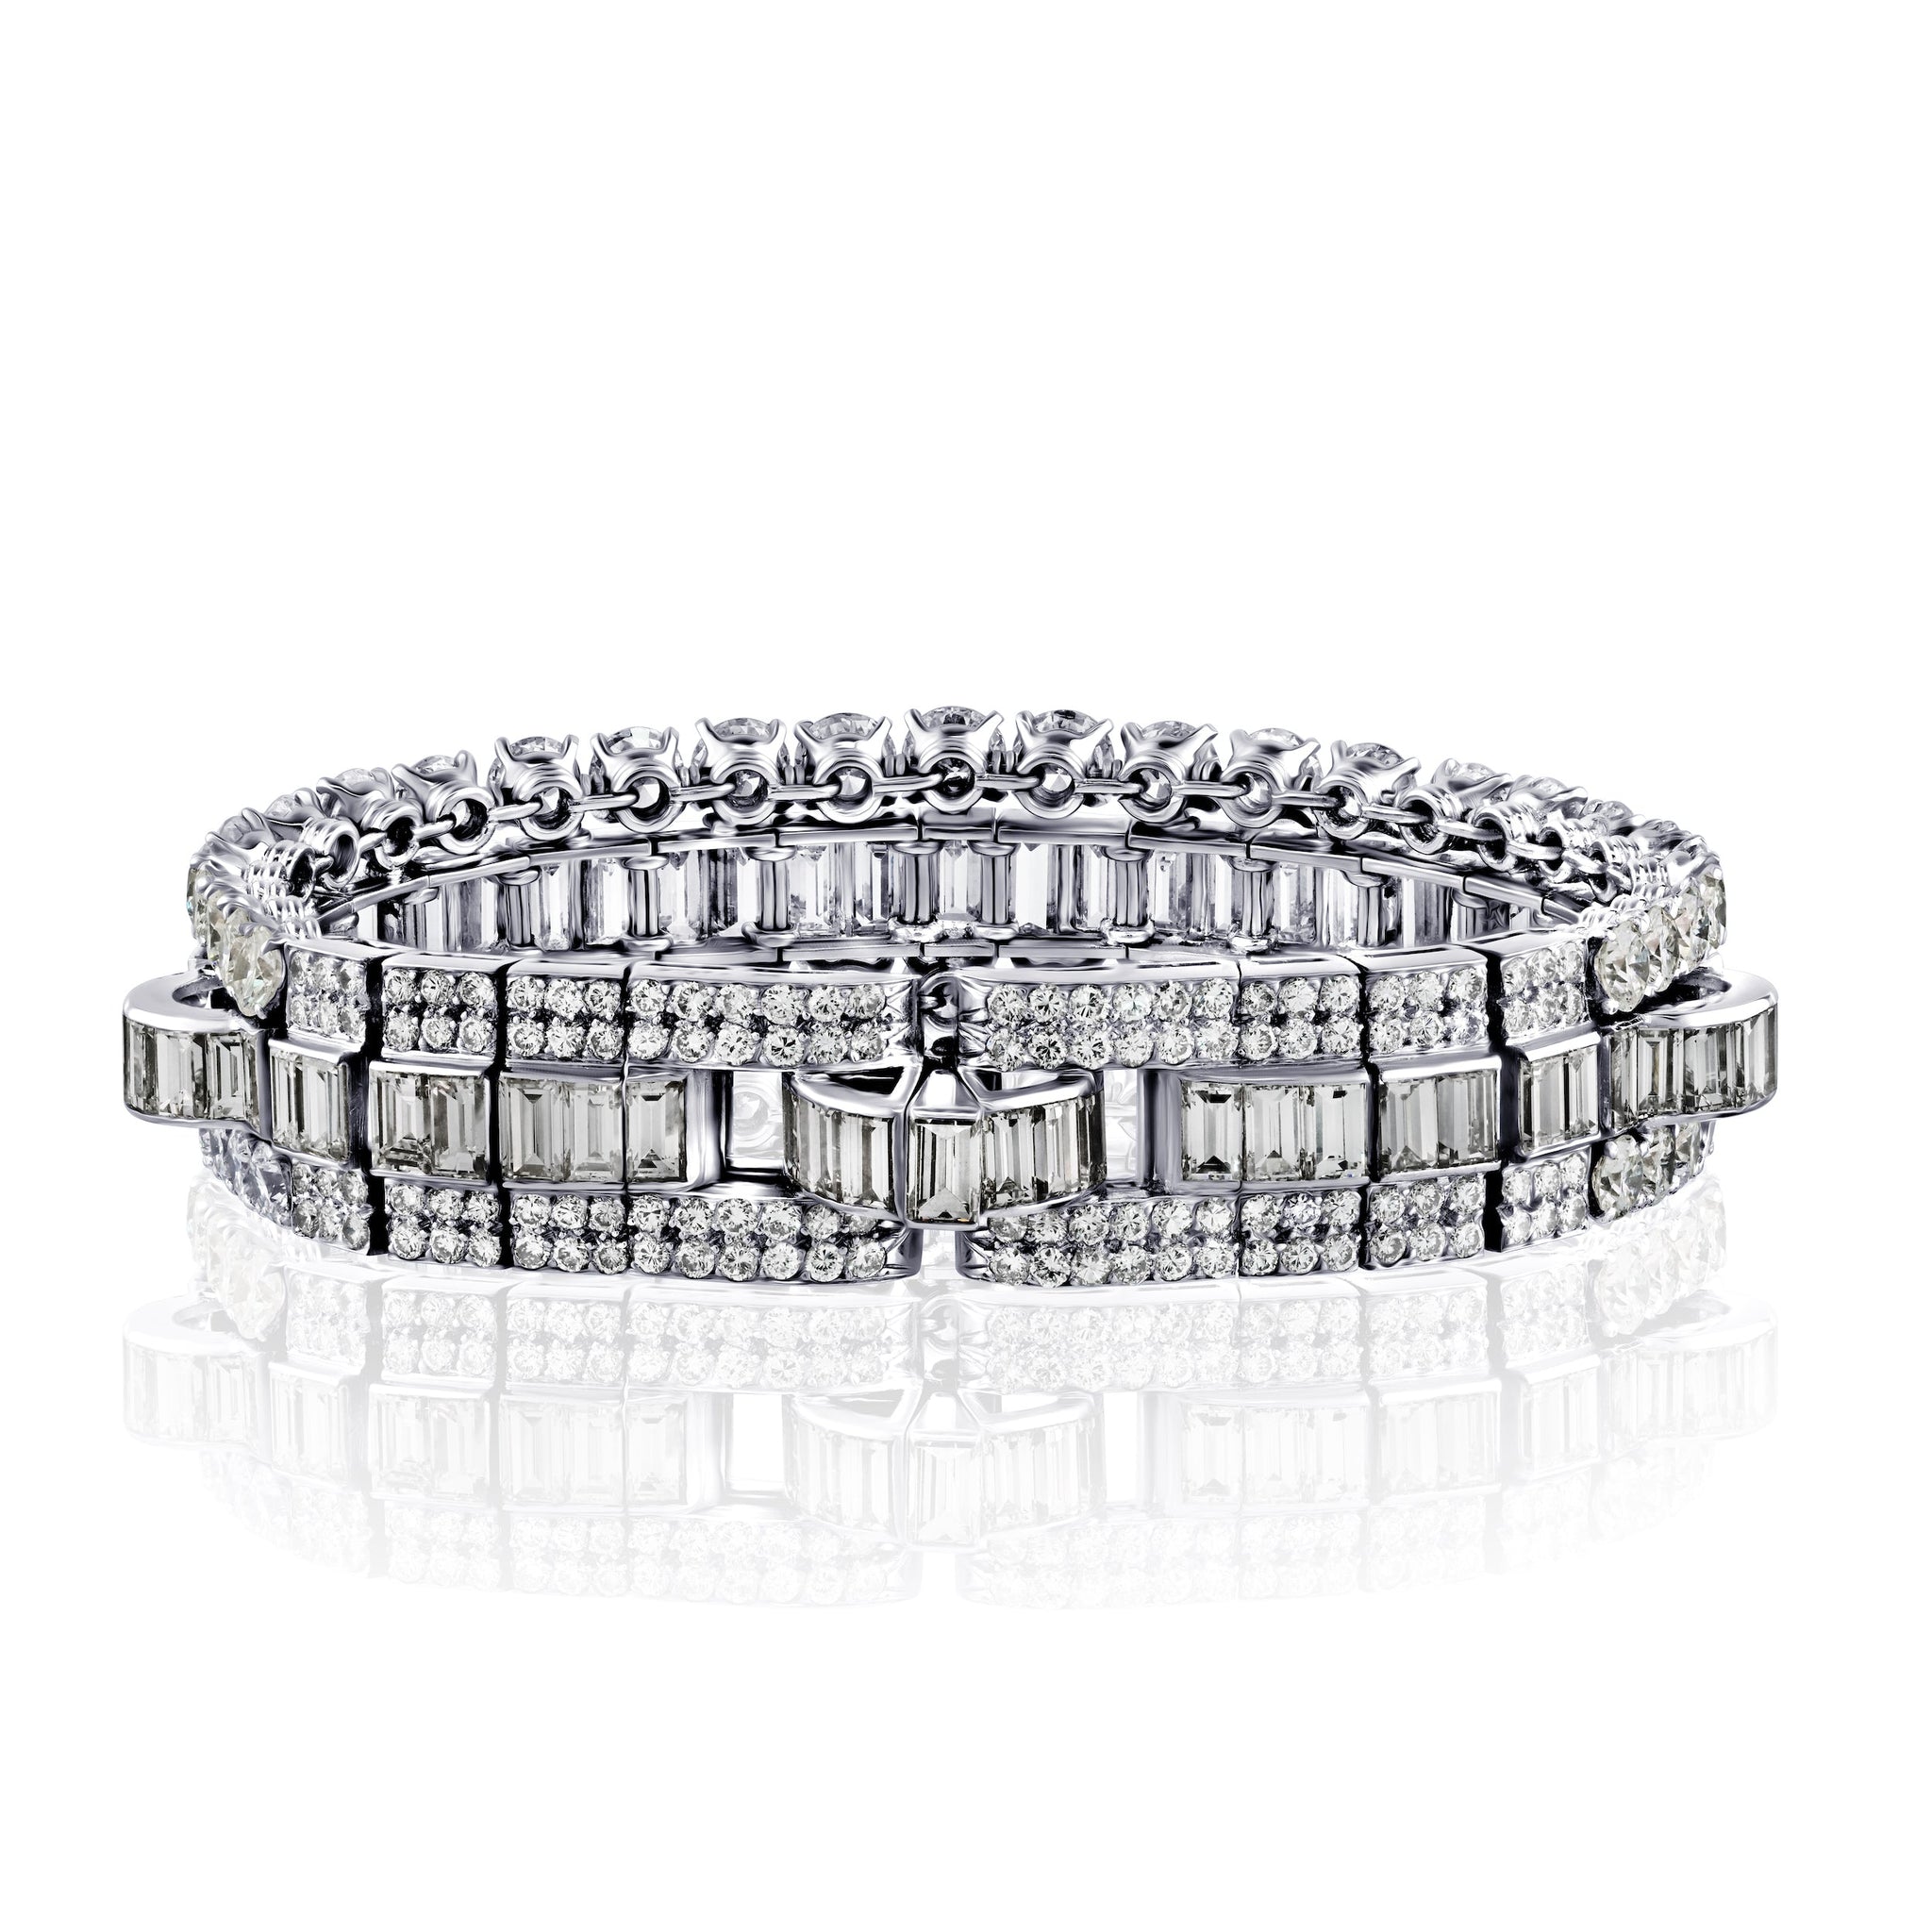 American Diamond Bangle Bracelet for College and Office - Heer Crystal  Bracelet by Blingvine